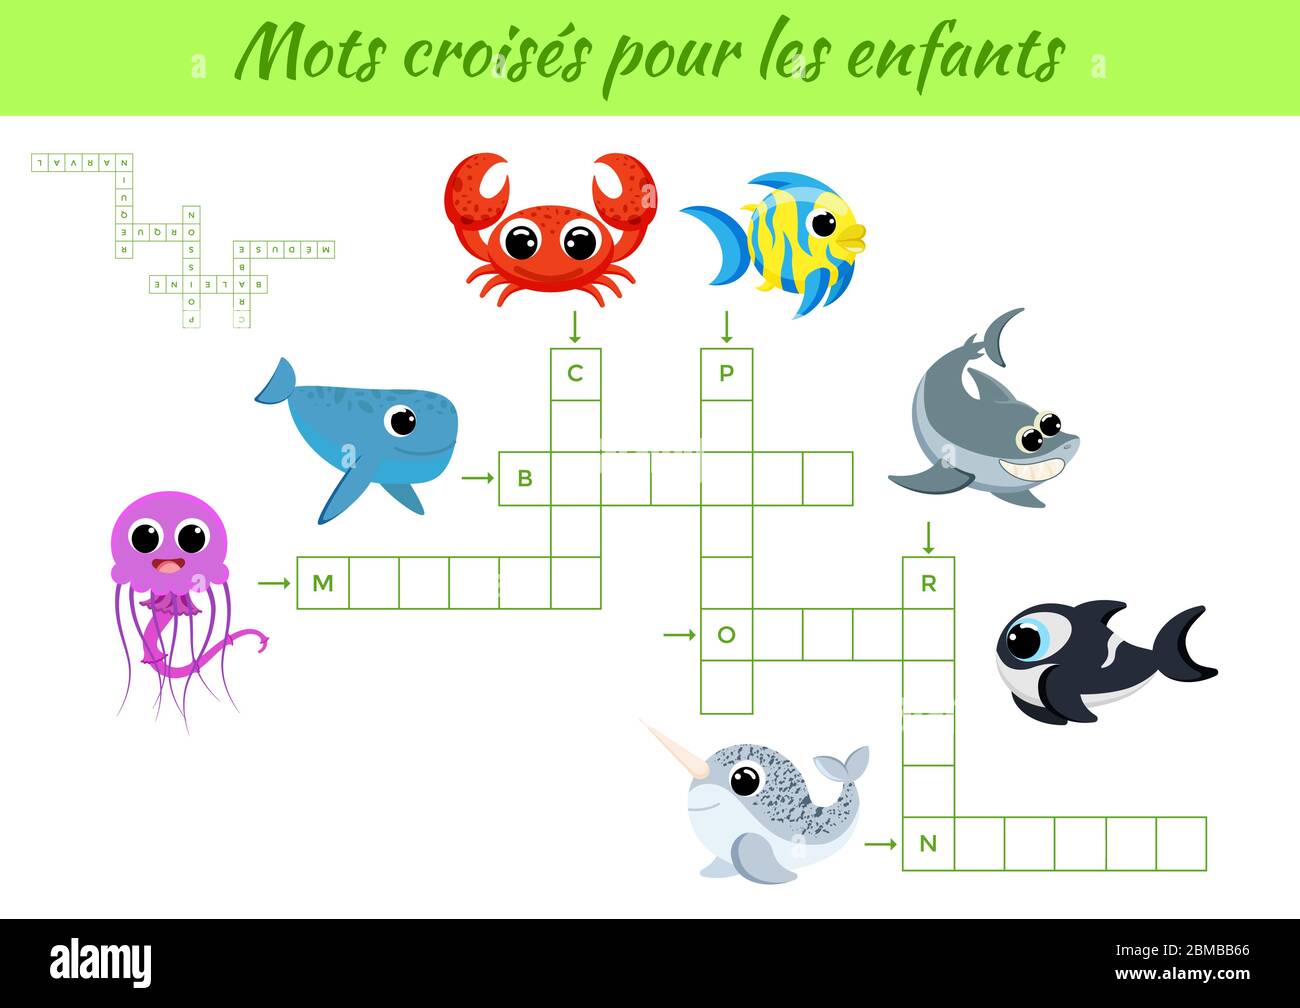 Mots croisés pour les enfants - Crossword for kids. Activity worksheet colorful printable version. Educational game for study French words. Stock Vector